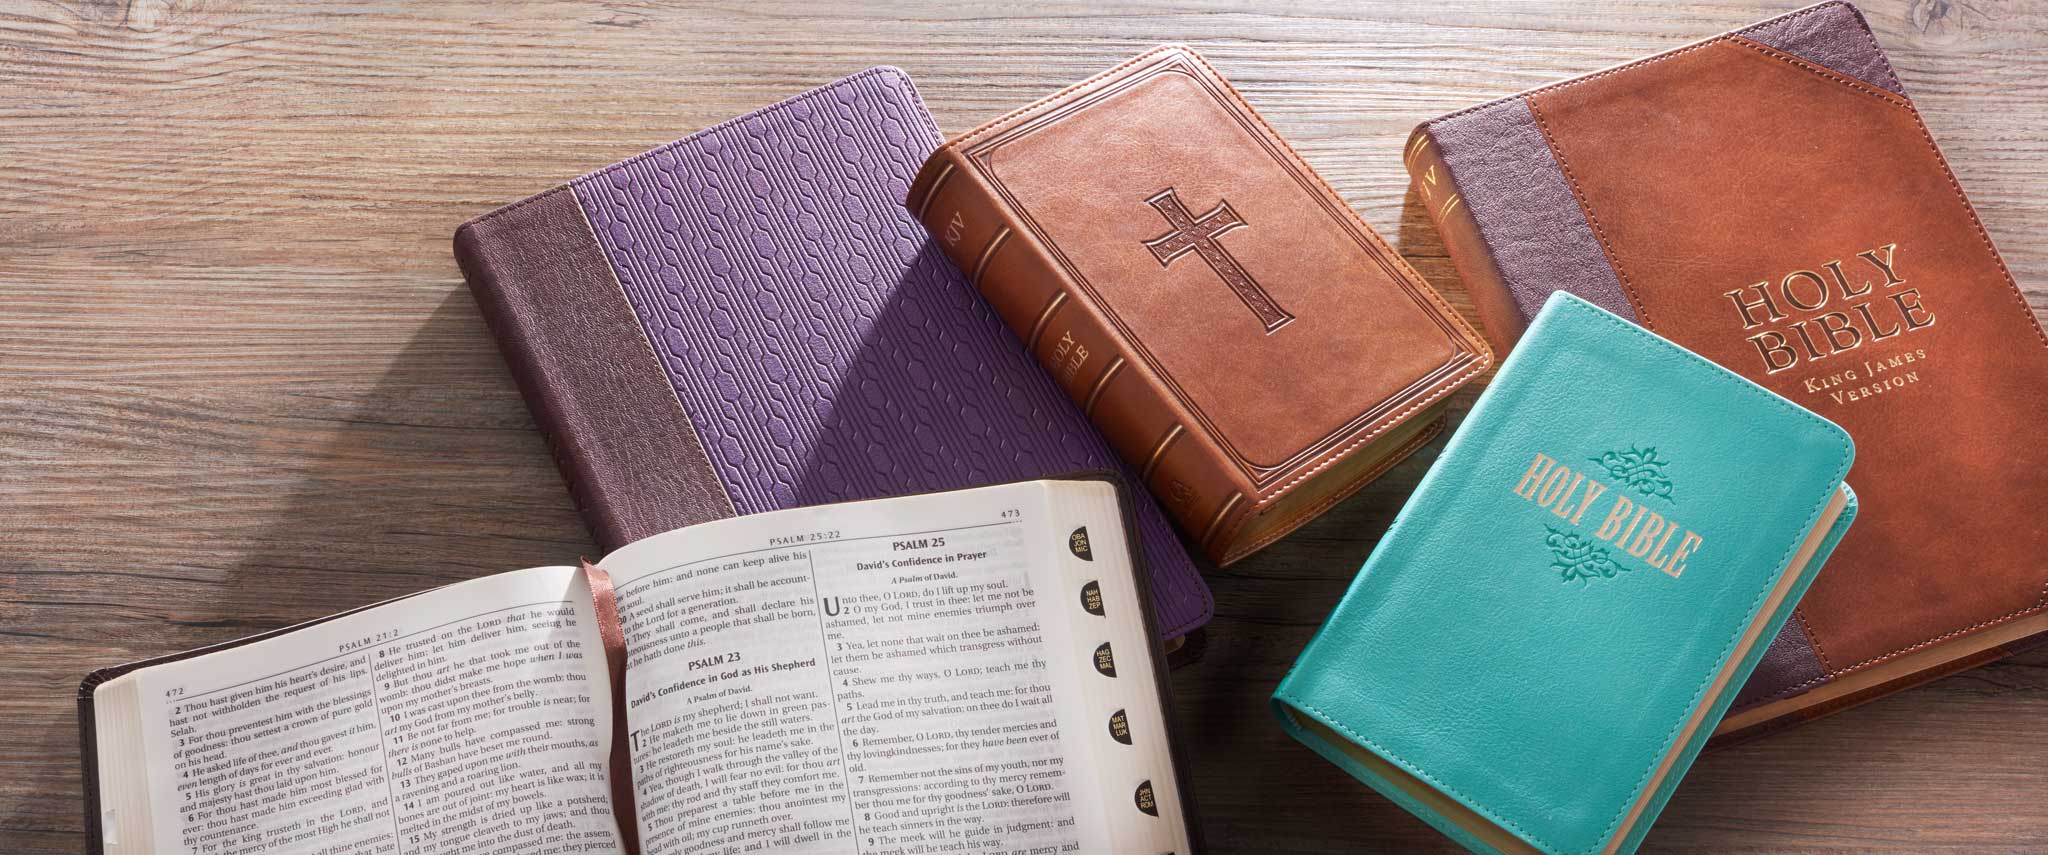 king-james-bibles-kjv-bibles-store